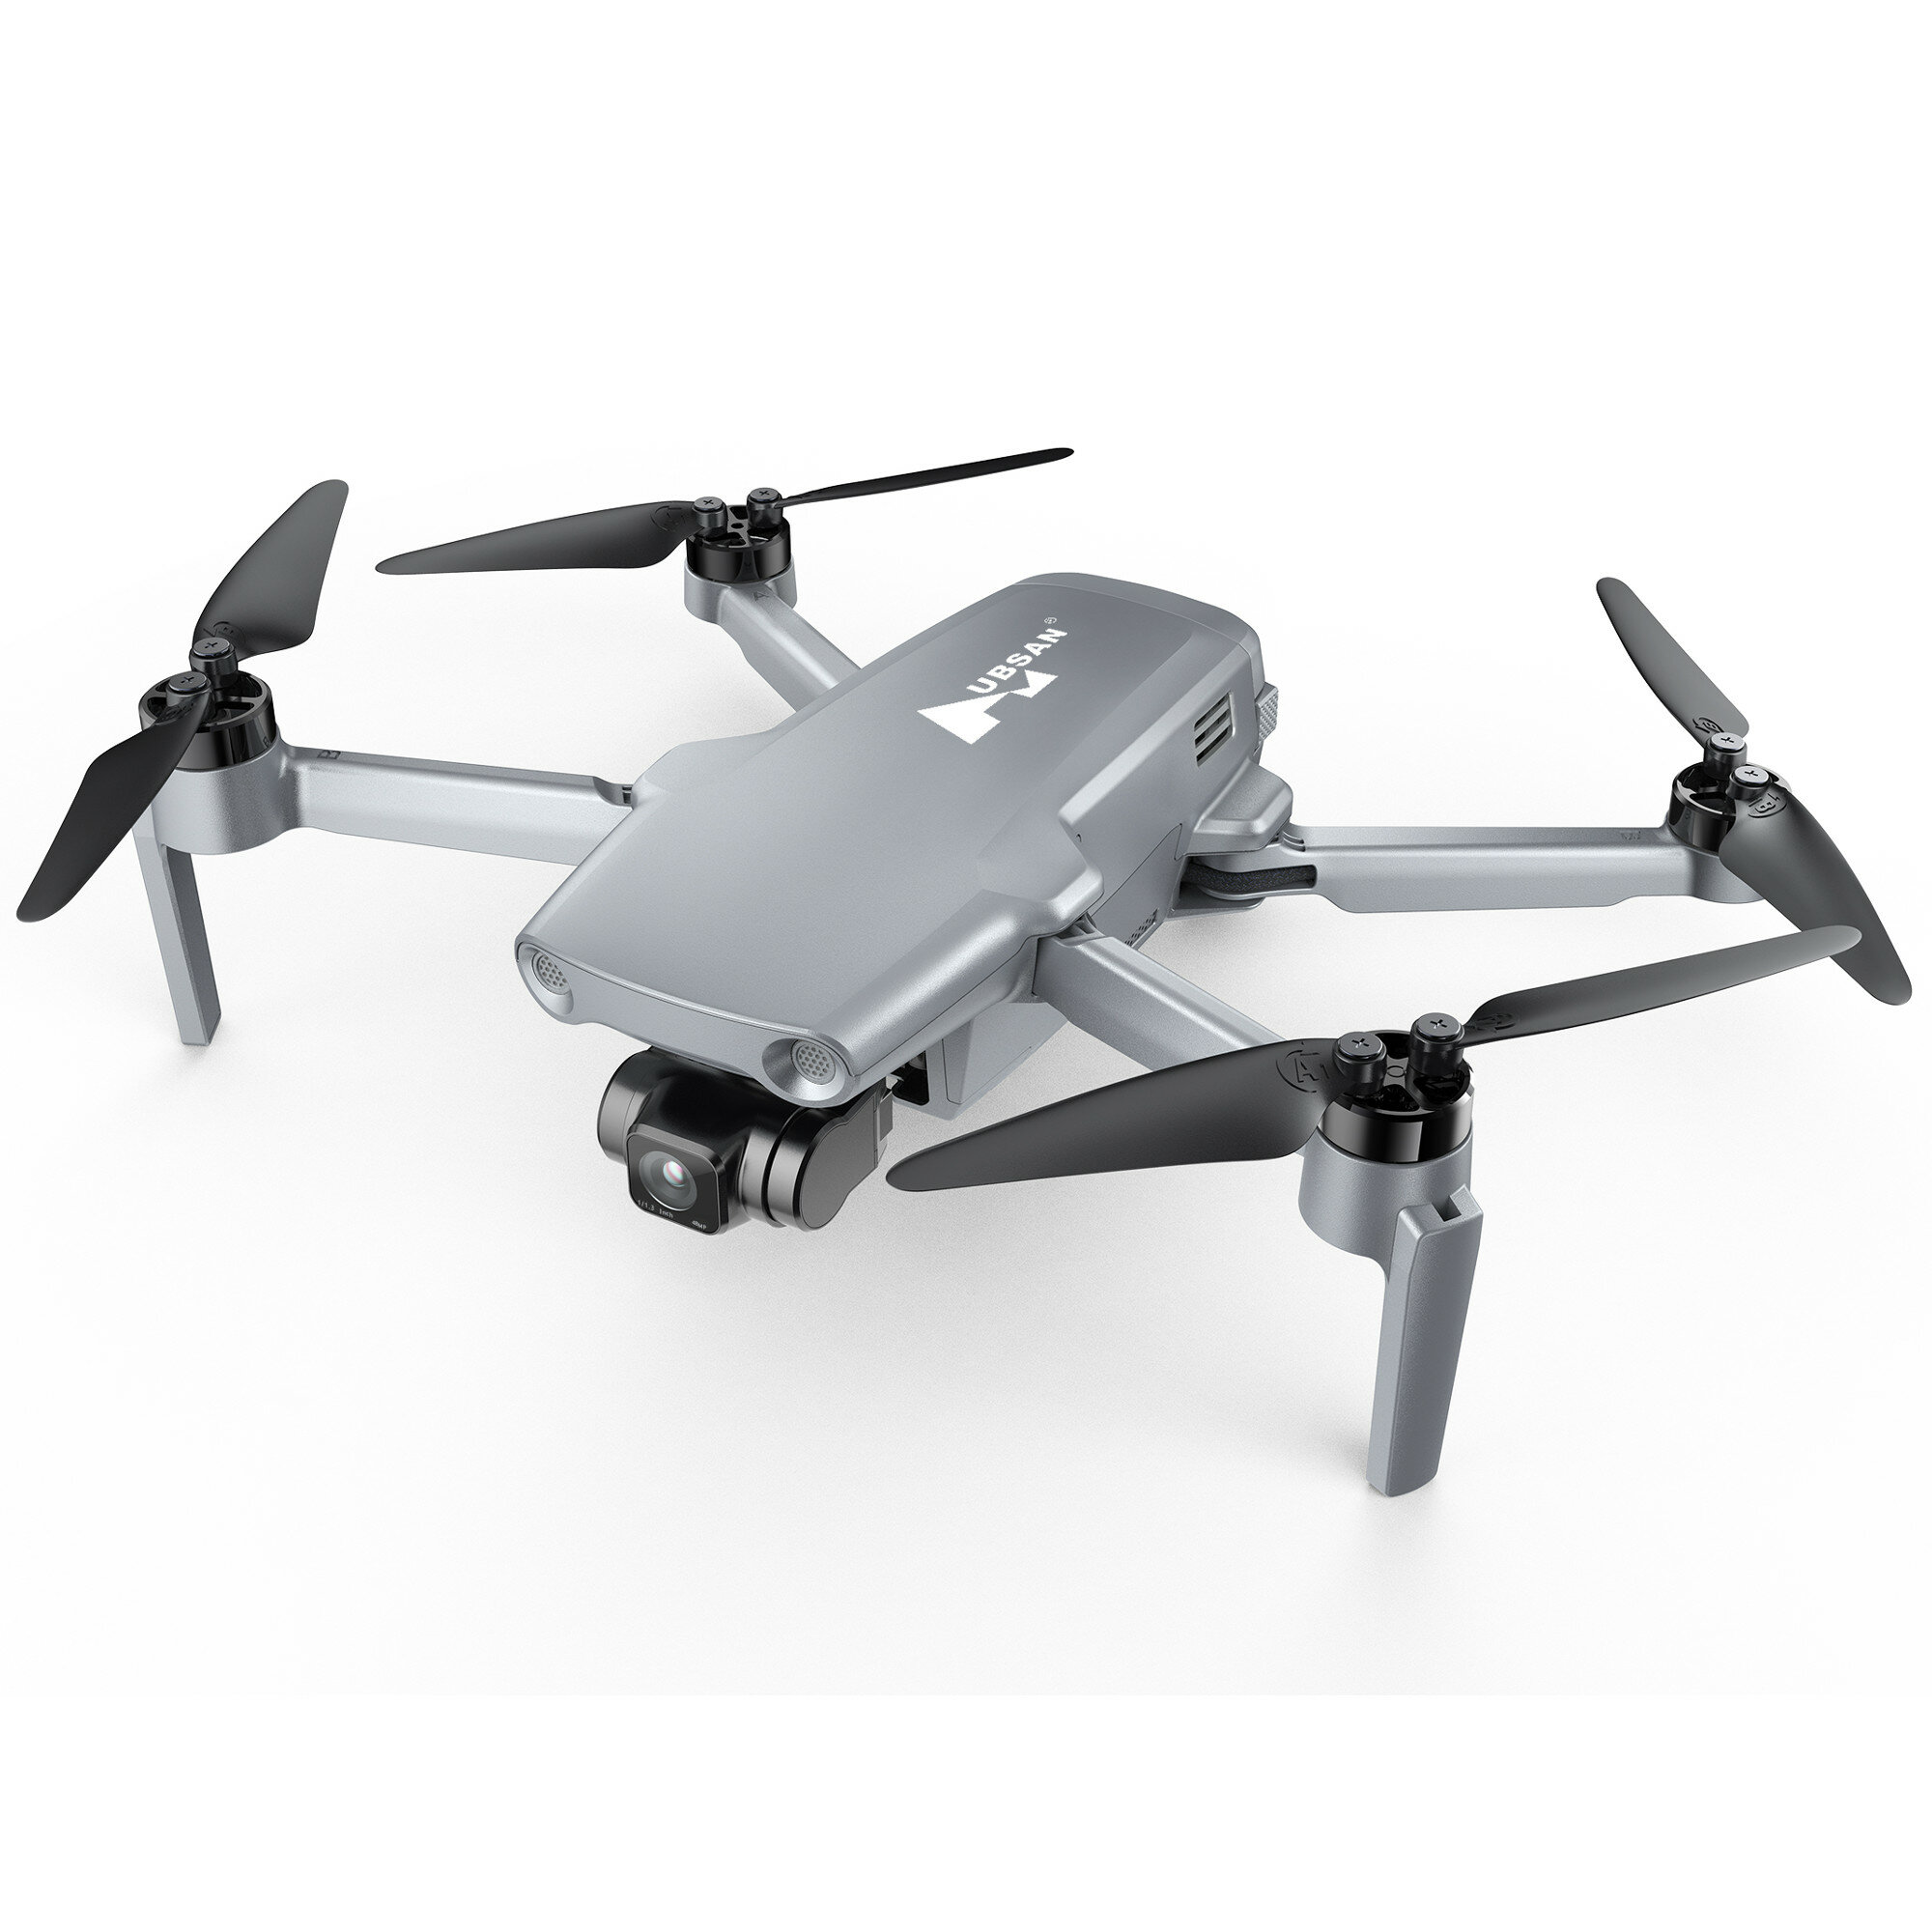 Hubsan ZINO Mini 249g GPS 10KM FPV with 4K 30fps Camera 3-axis Gimbal 40mins Flight Time RC Drone Quadcopter RTF